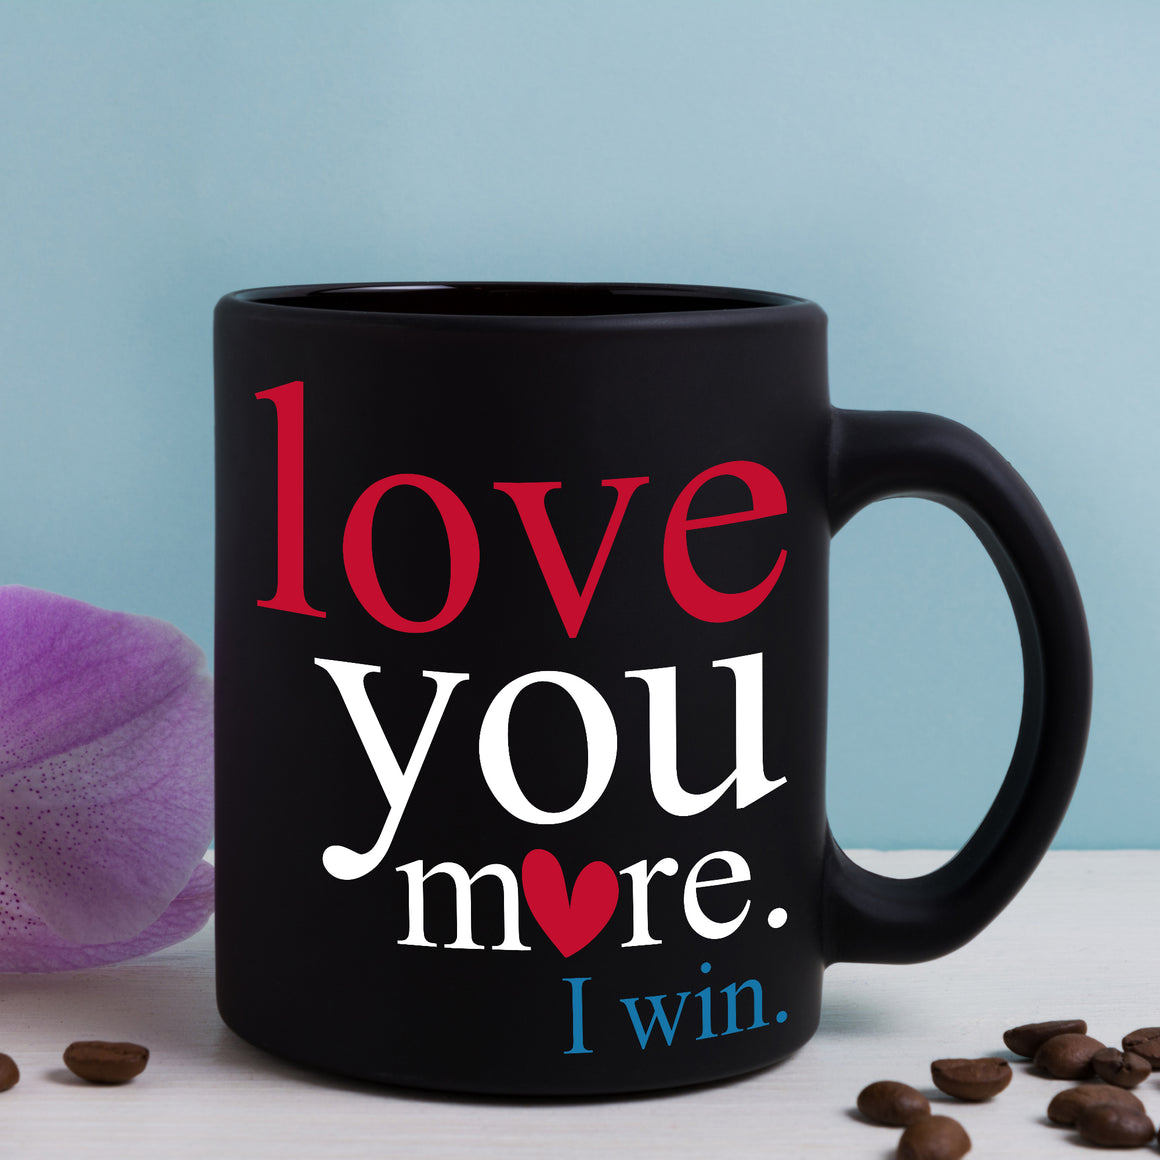 Love You More - Black Mug